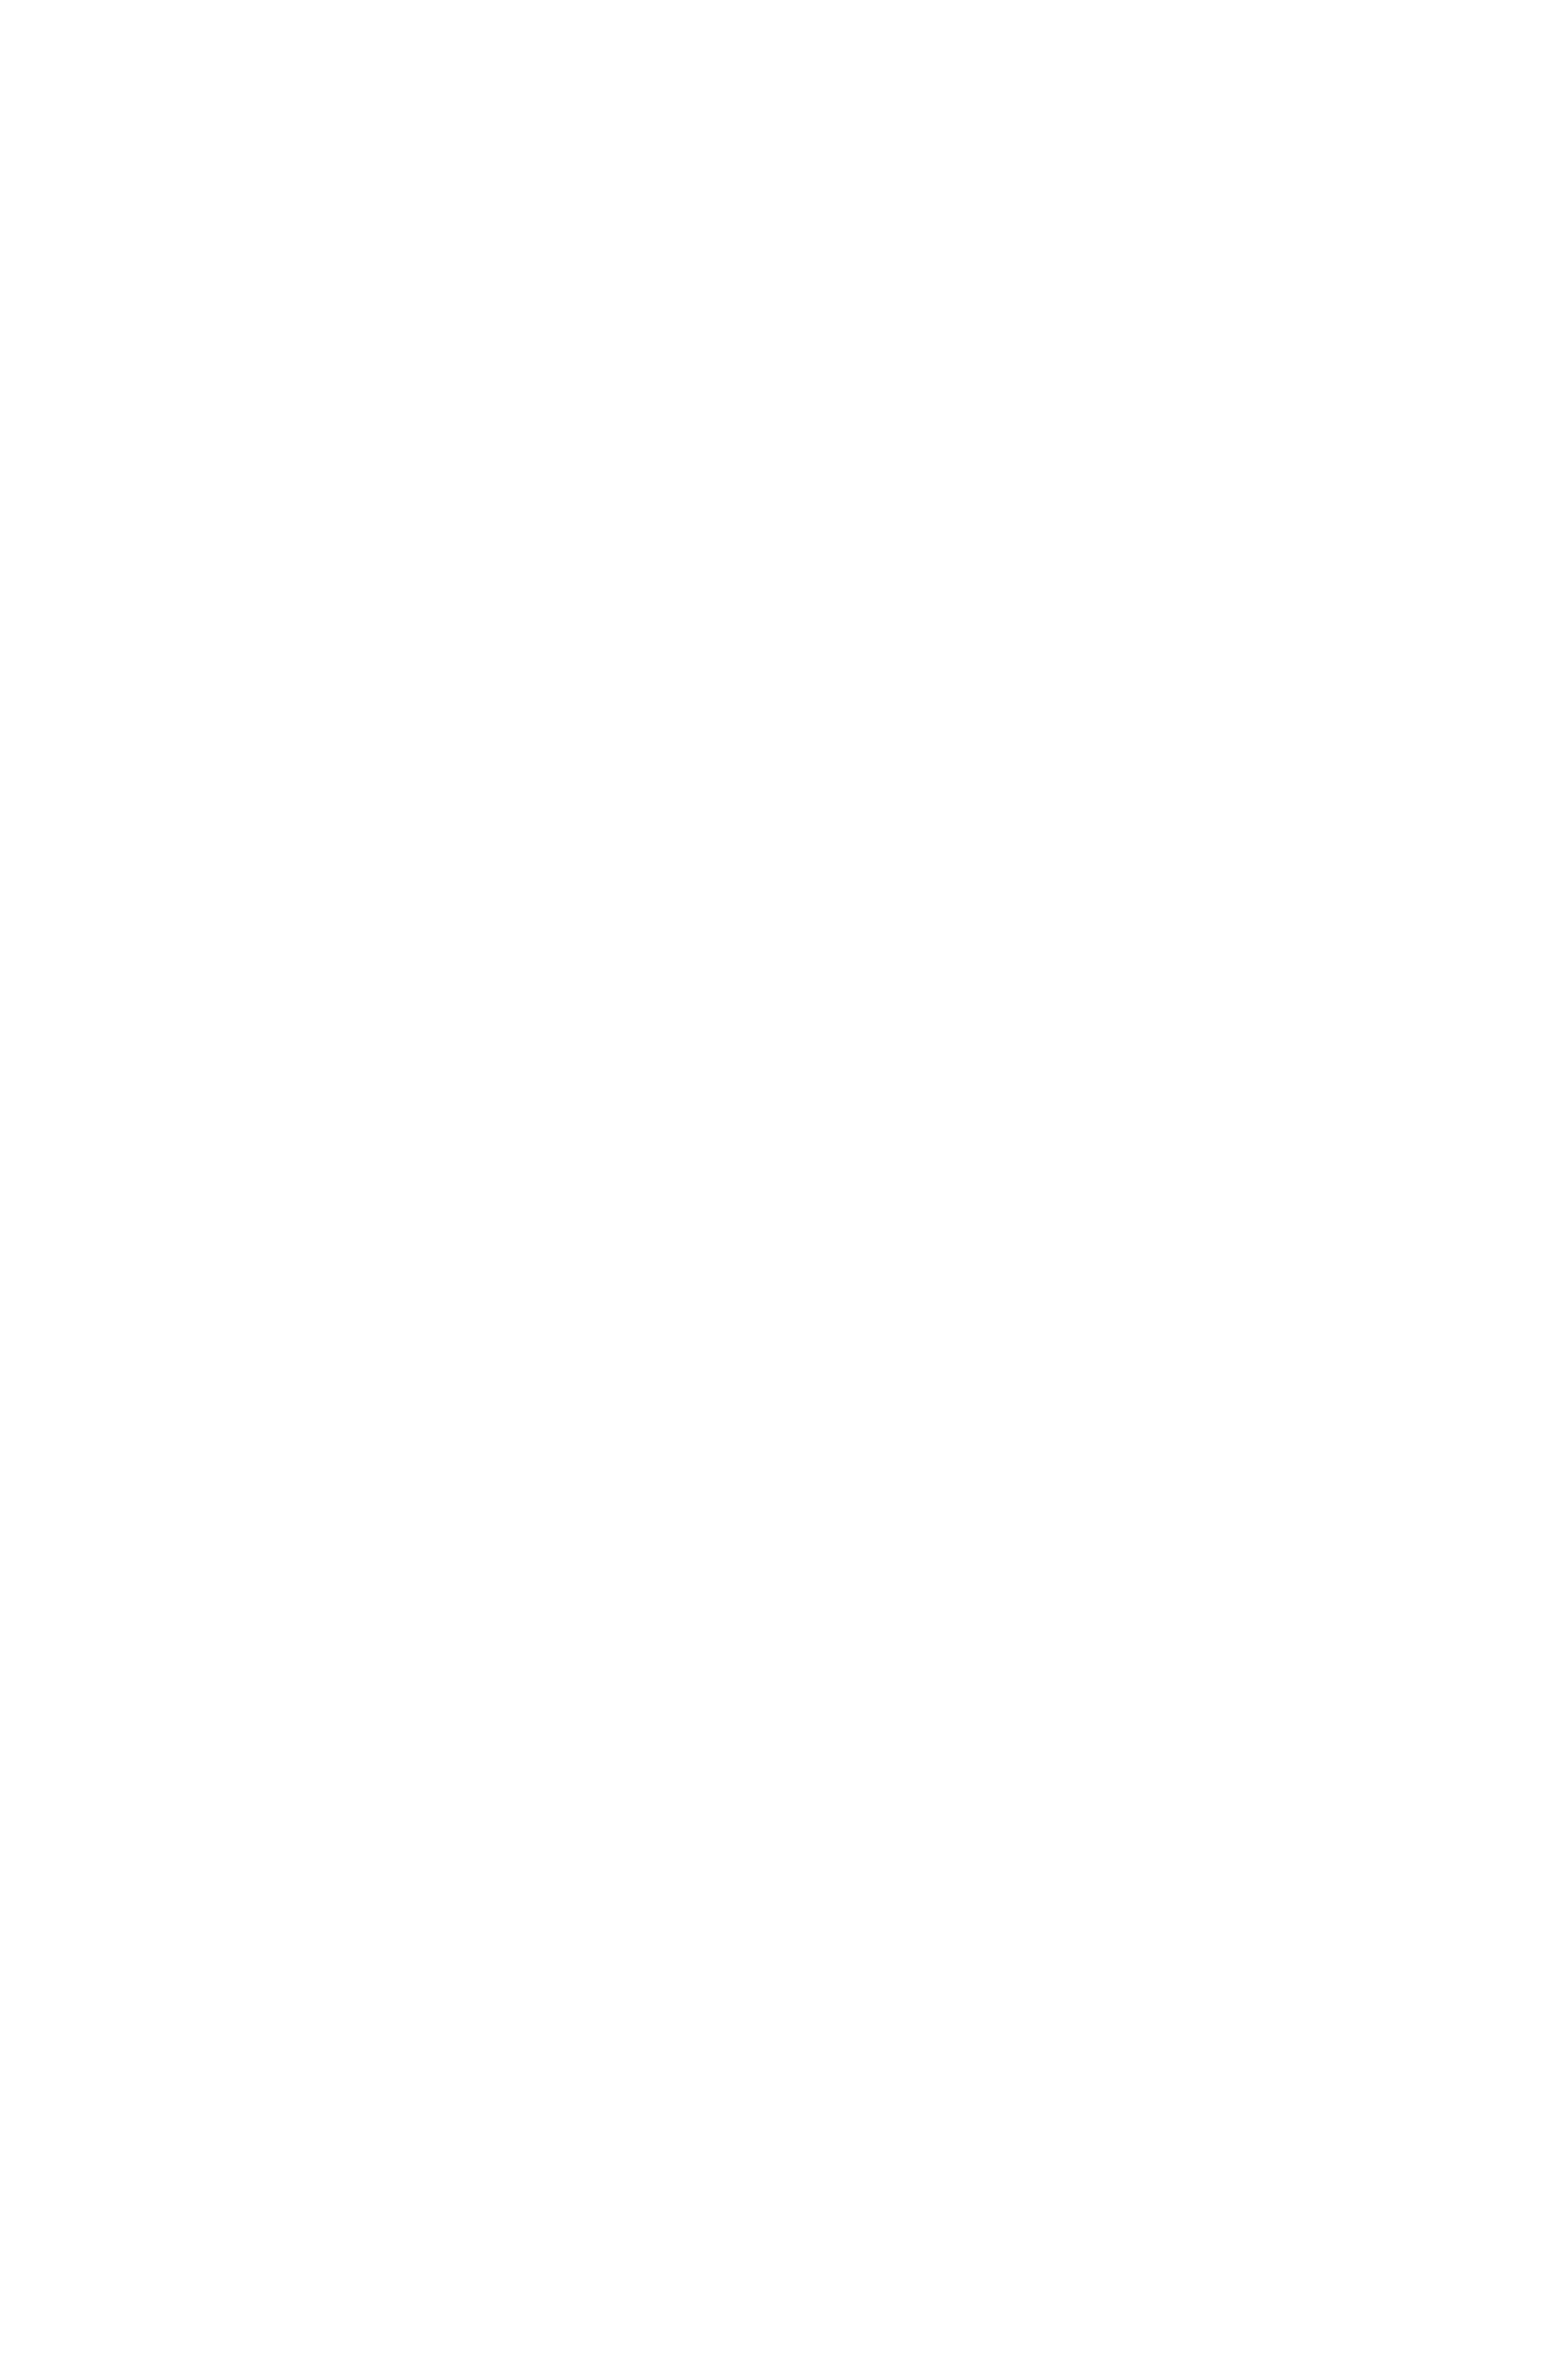 Nikolay logo